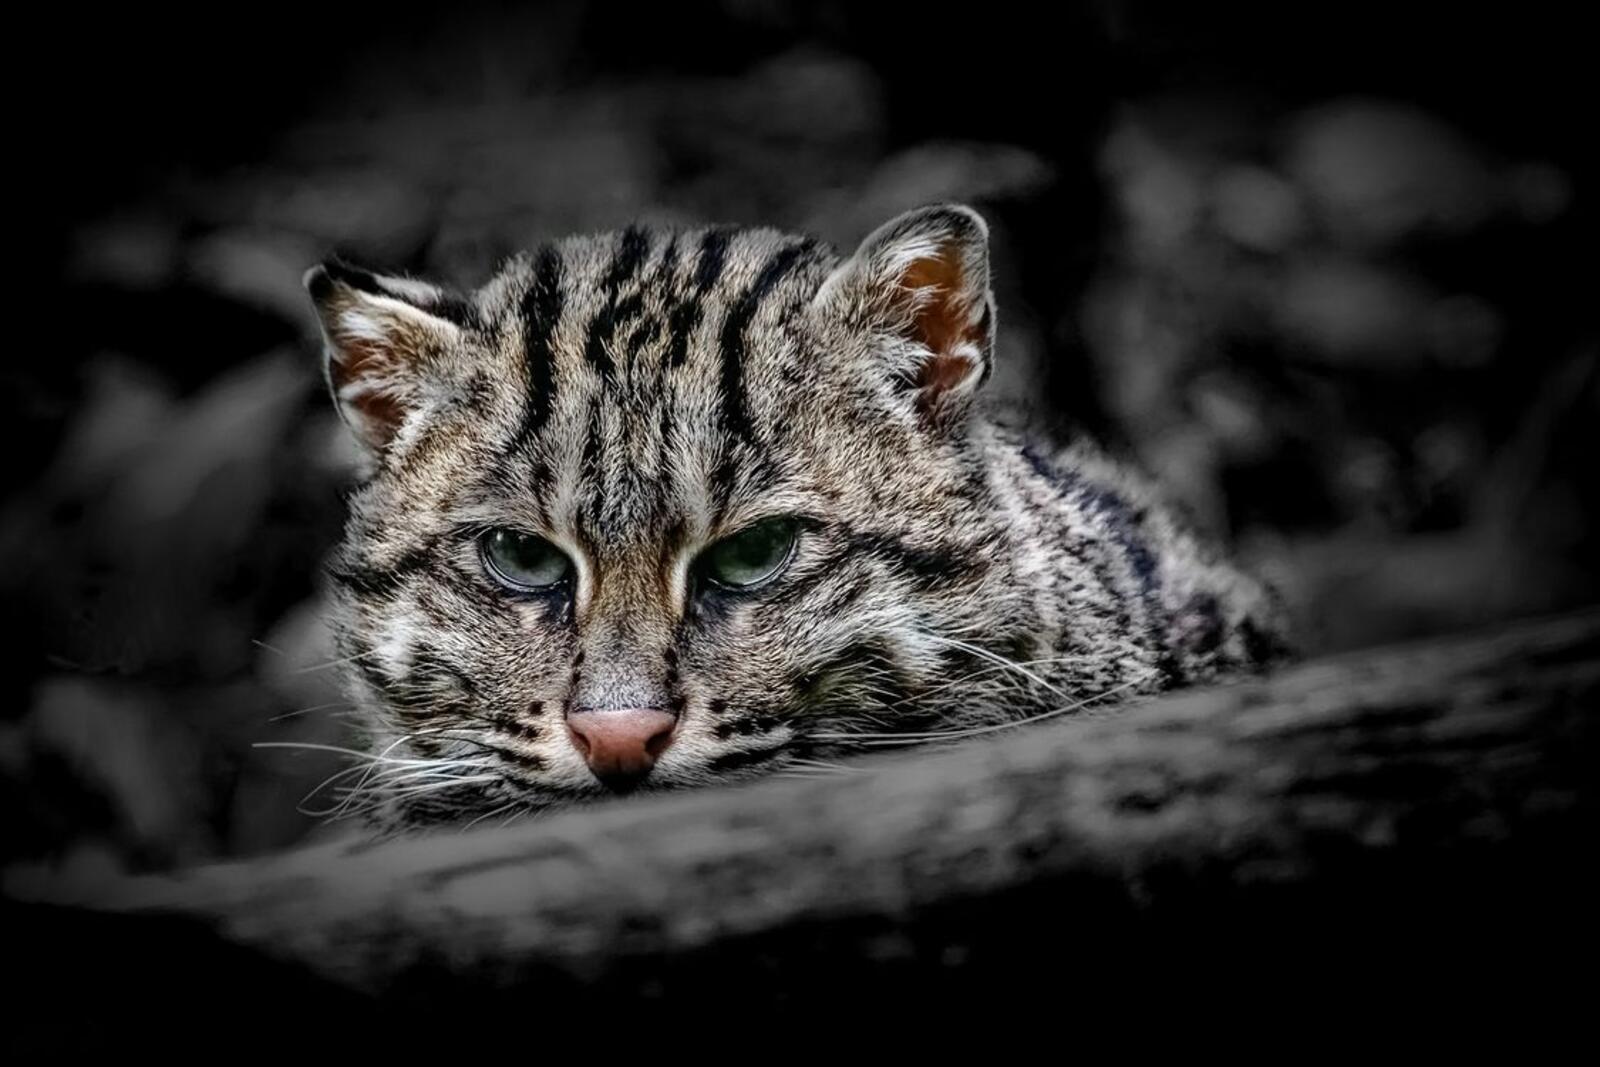 Wallpapers Southeast Asian wild cat fisher cat photo portrait on the desktop